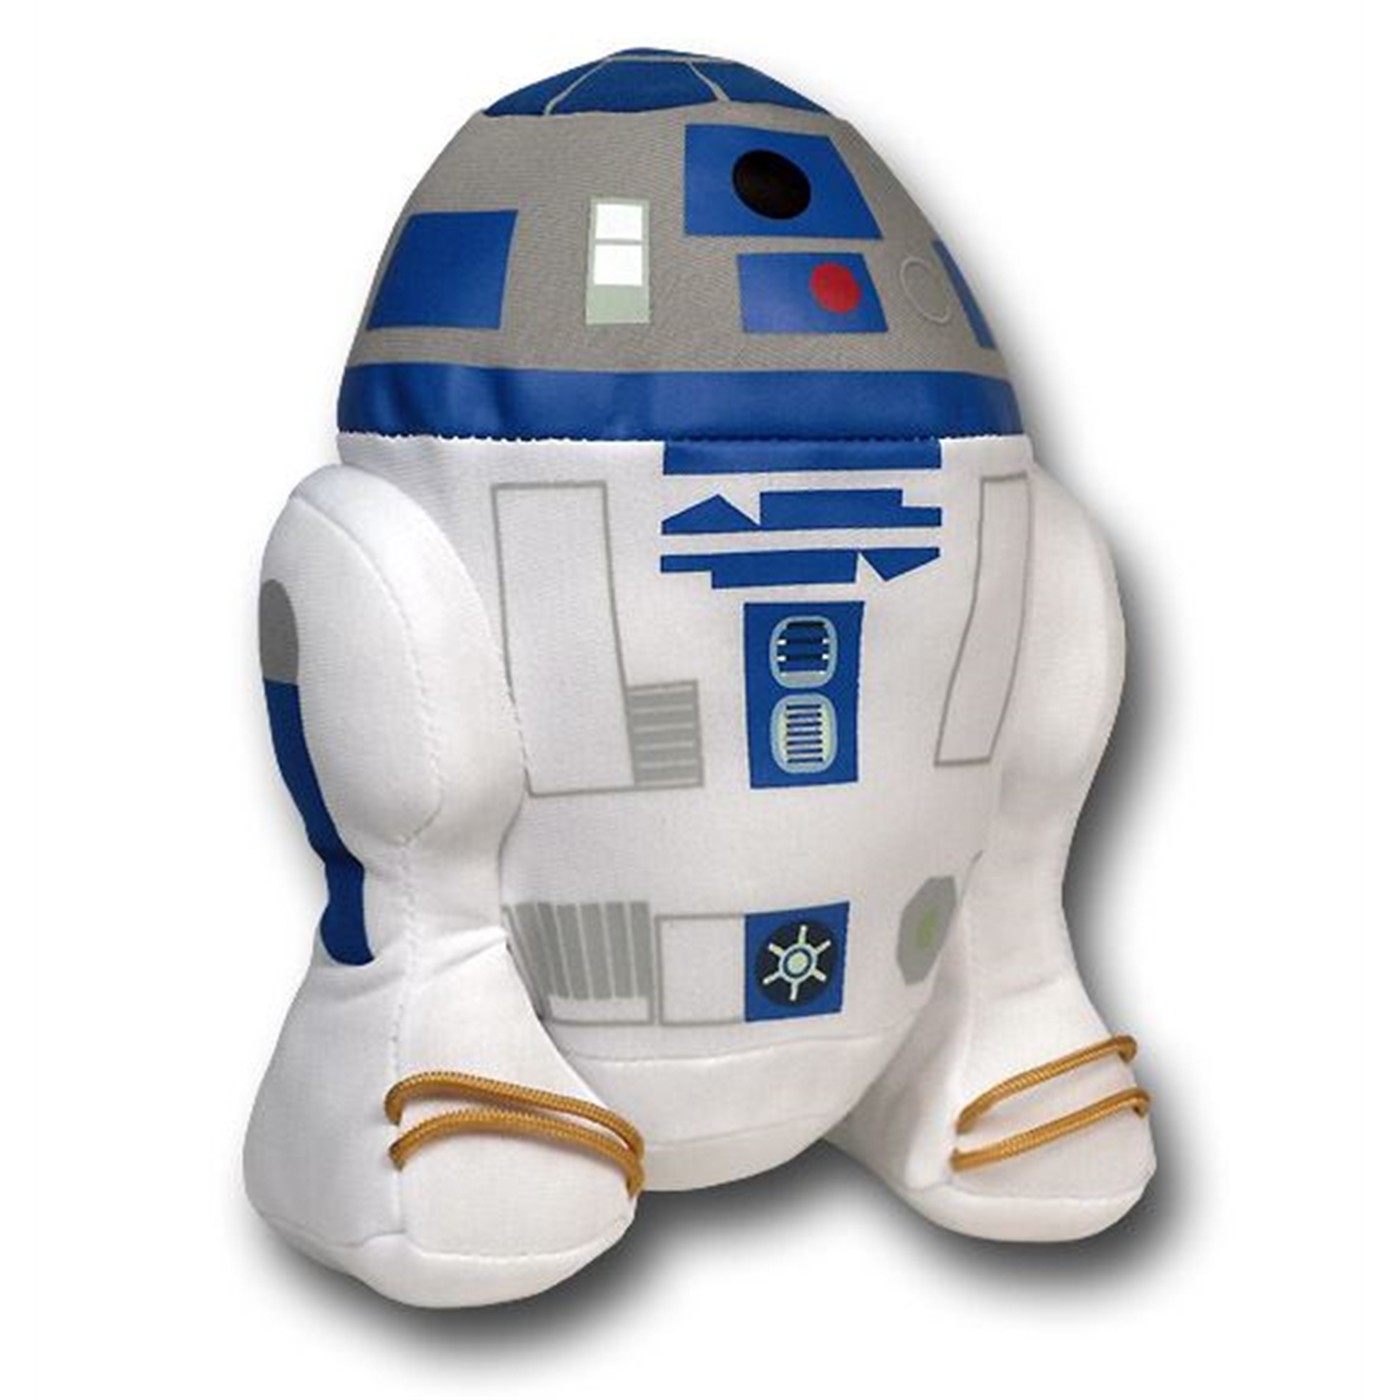 Star Wars R2D2 Super Deformed Plush Toy